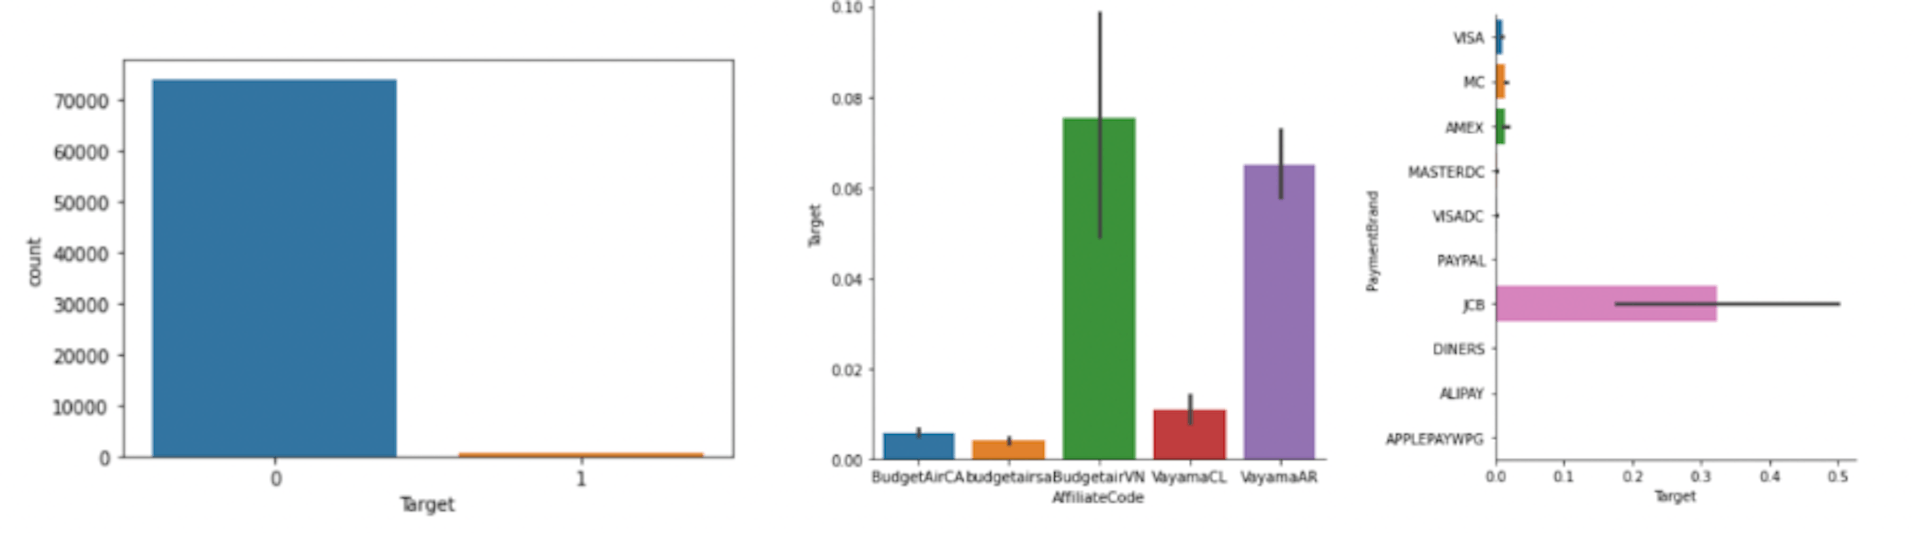 Sample target visualization of the dataset